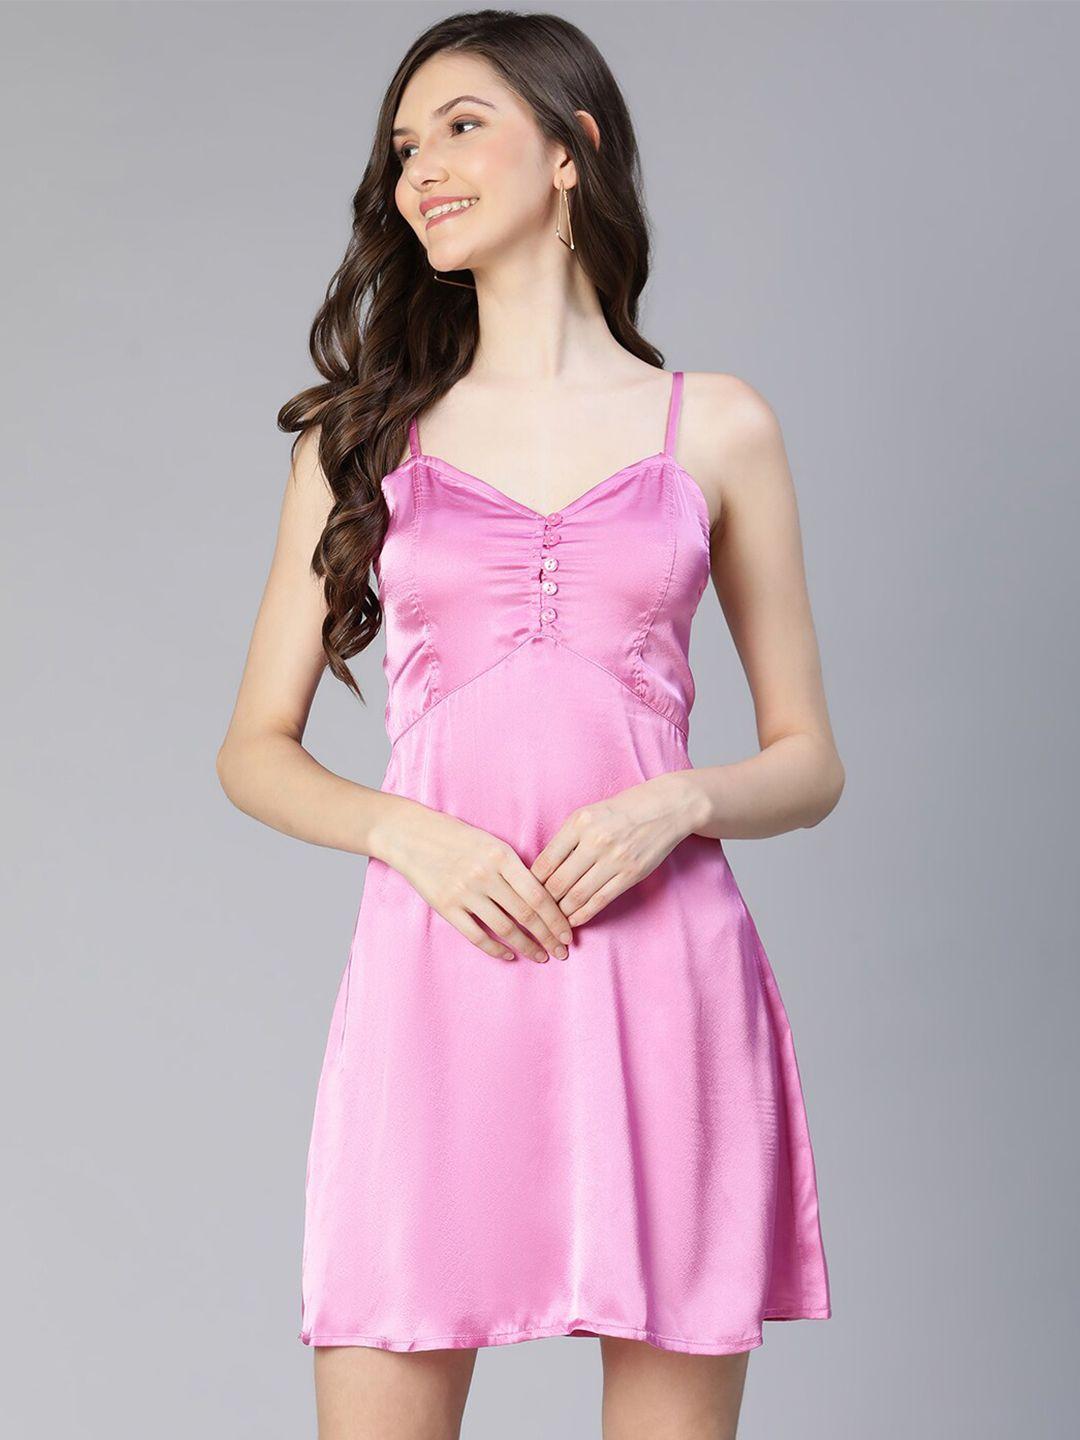 oxolloxo women pink solid shoulder straps satin mini dress